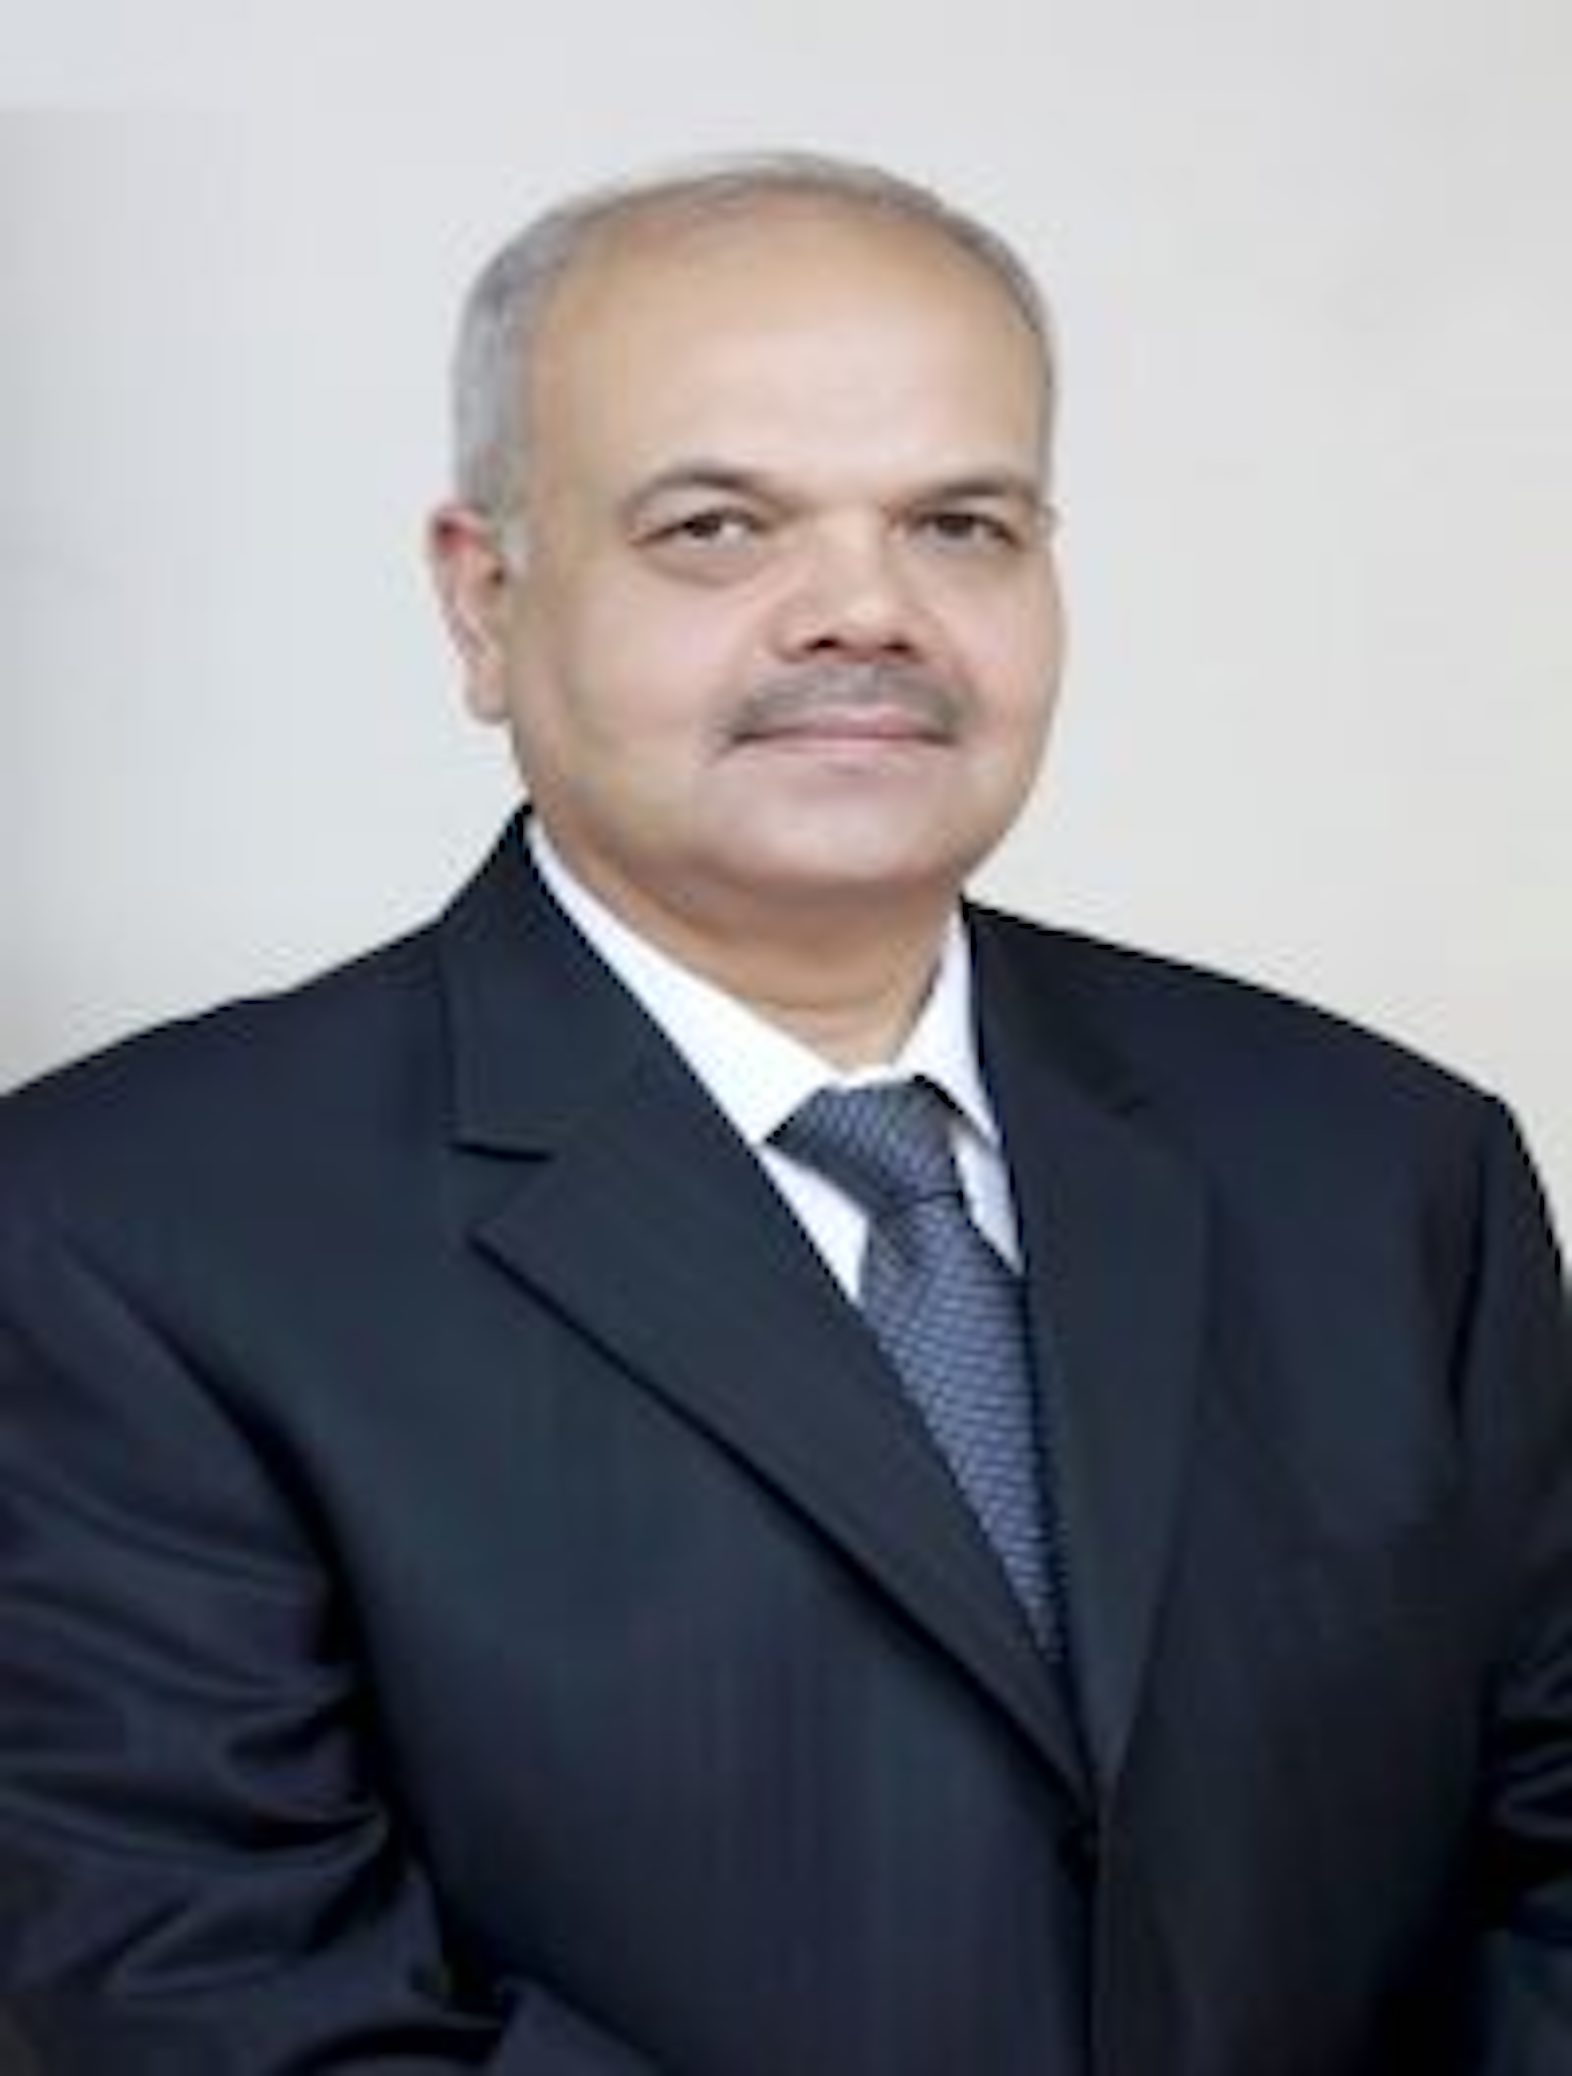 Mohammed Al Khshali